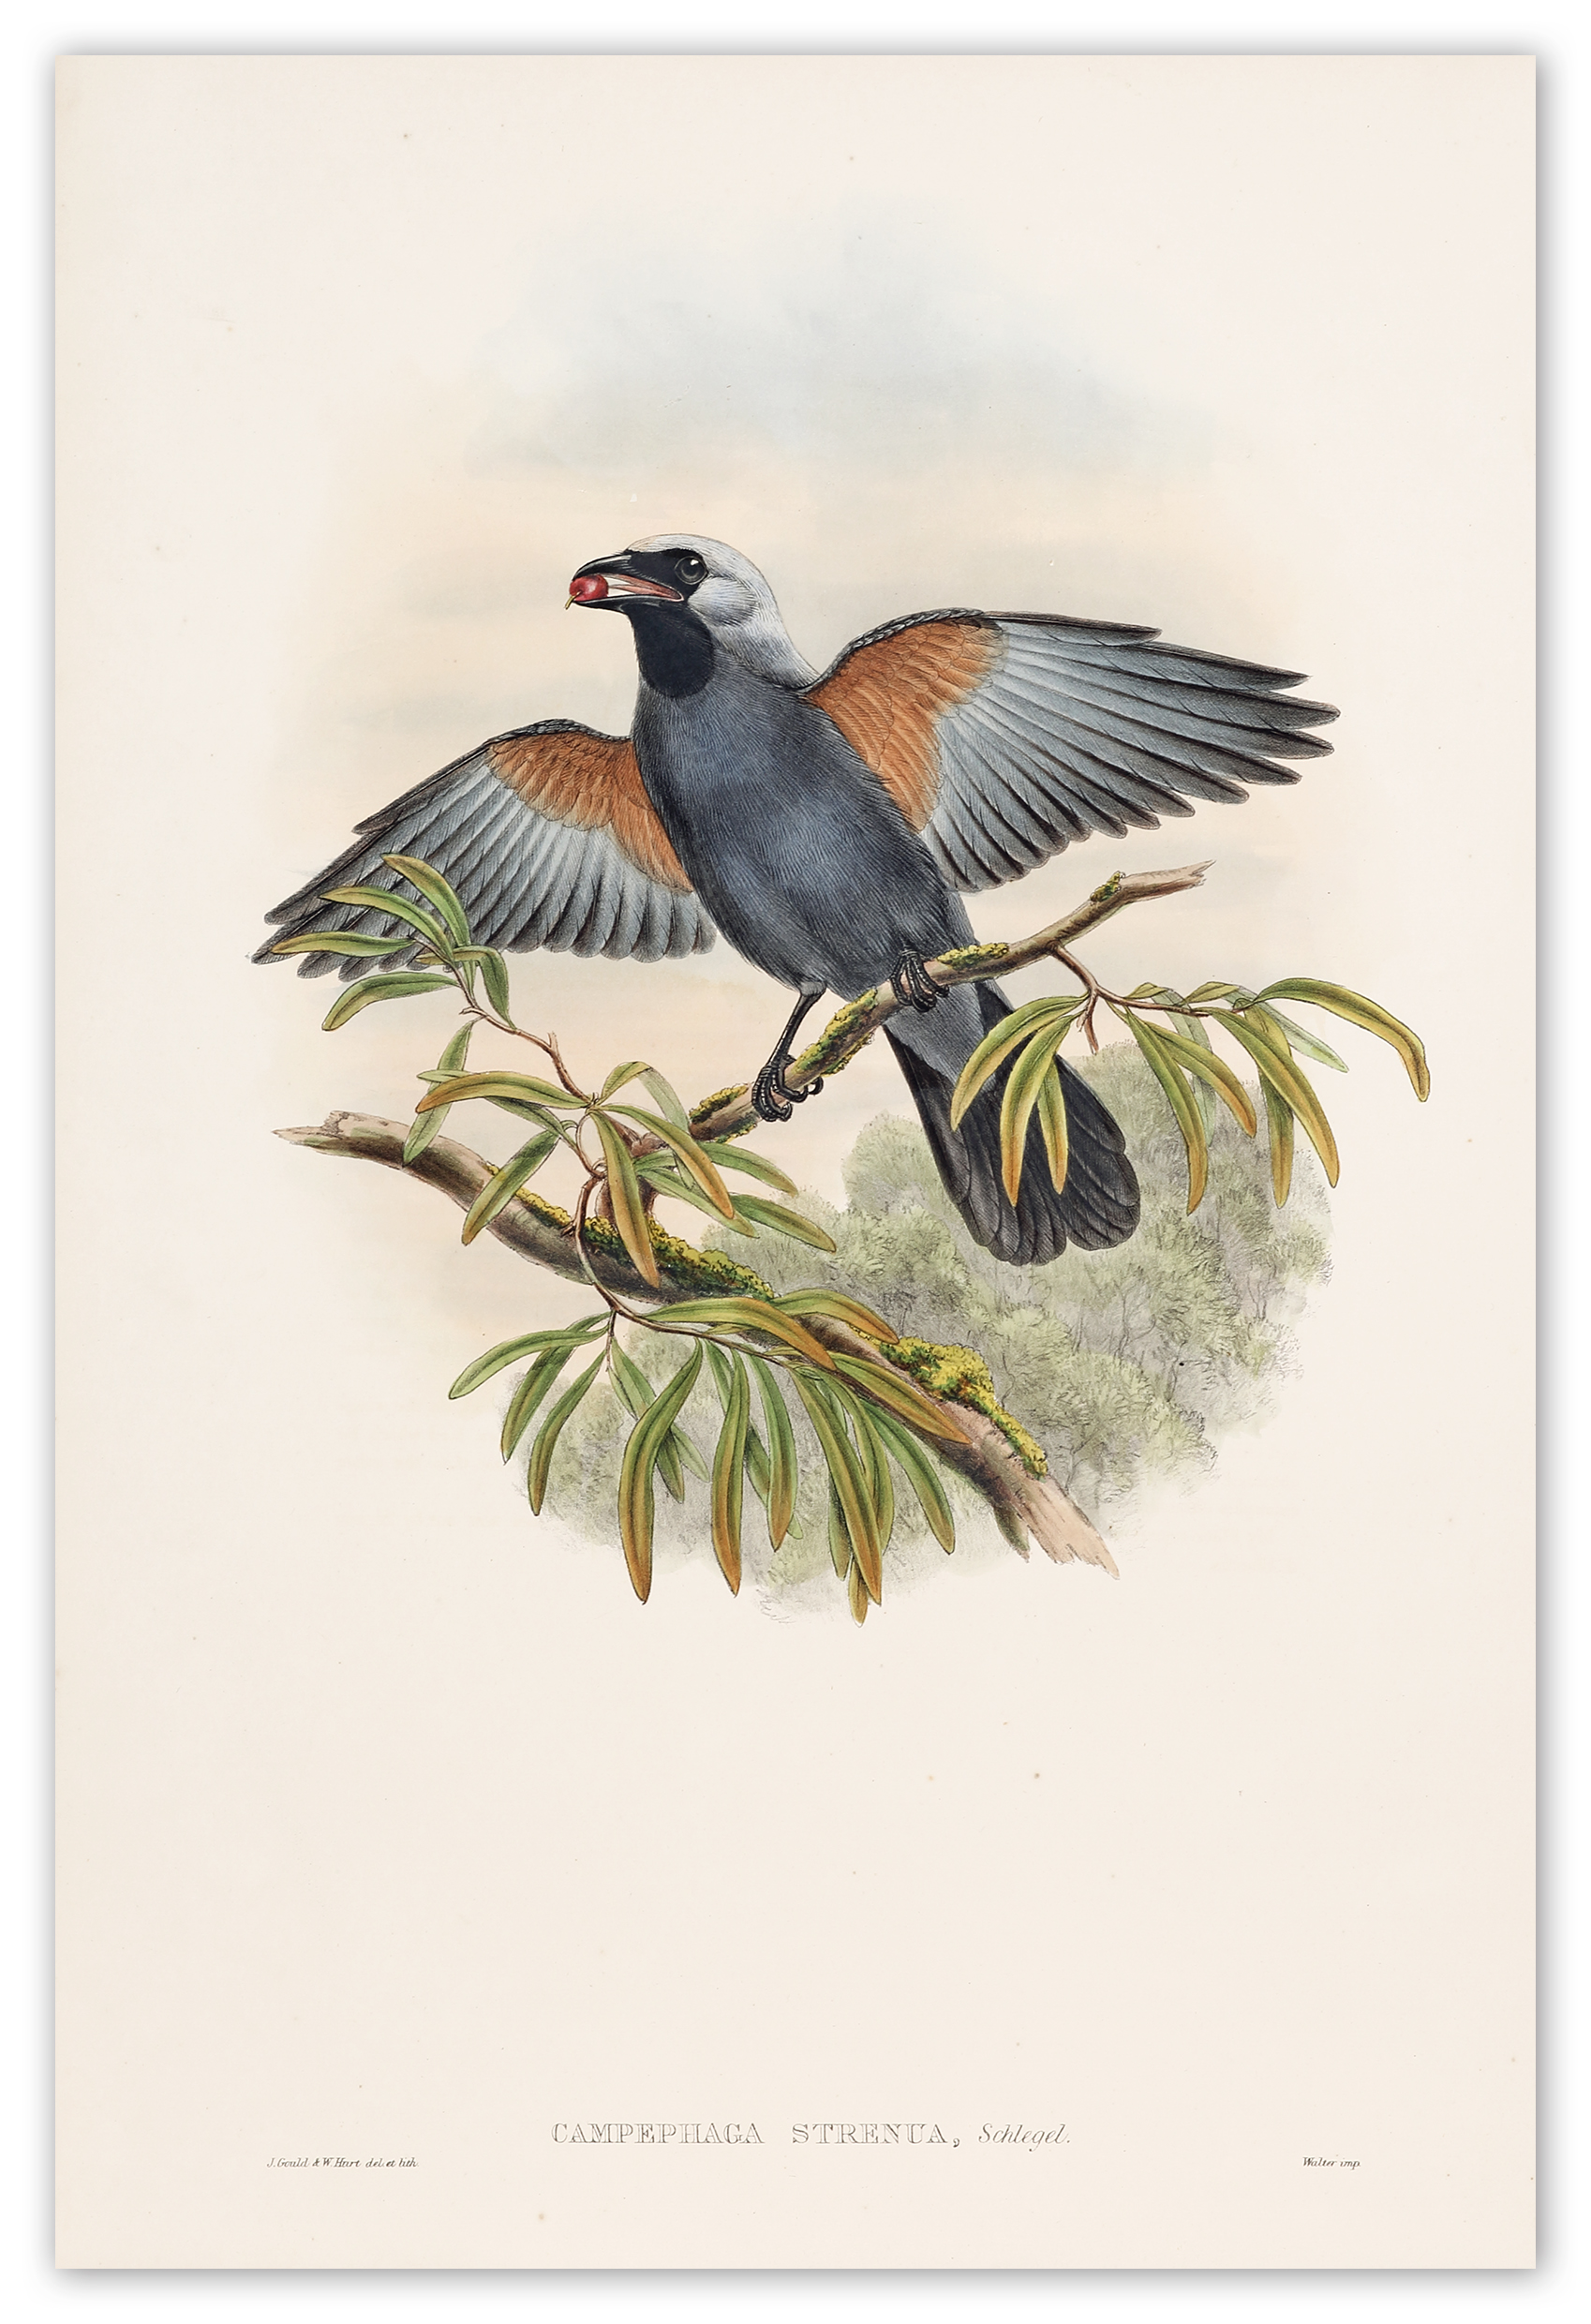 Campephaga Strenua. Blue-grey campephaga. - Antique Print from 1875